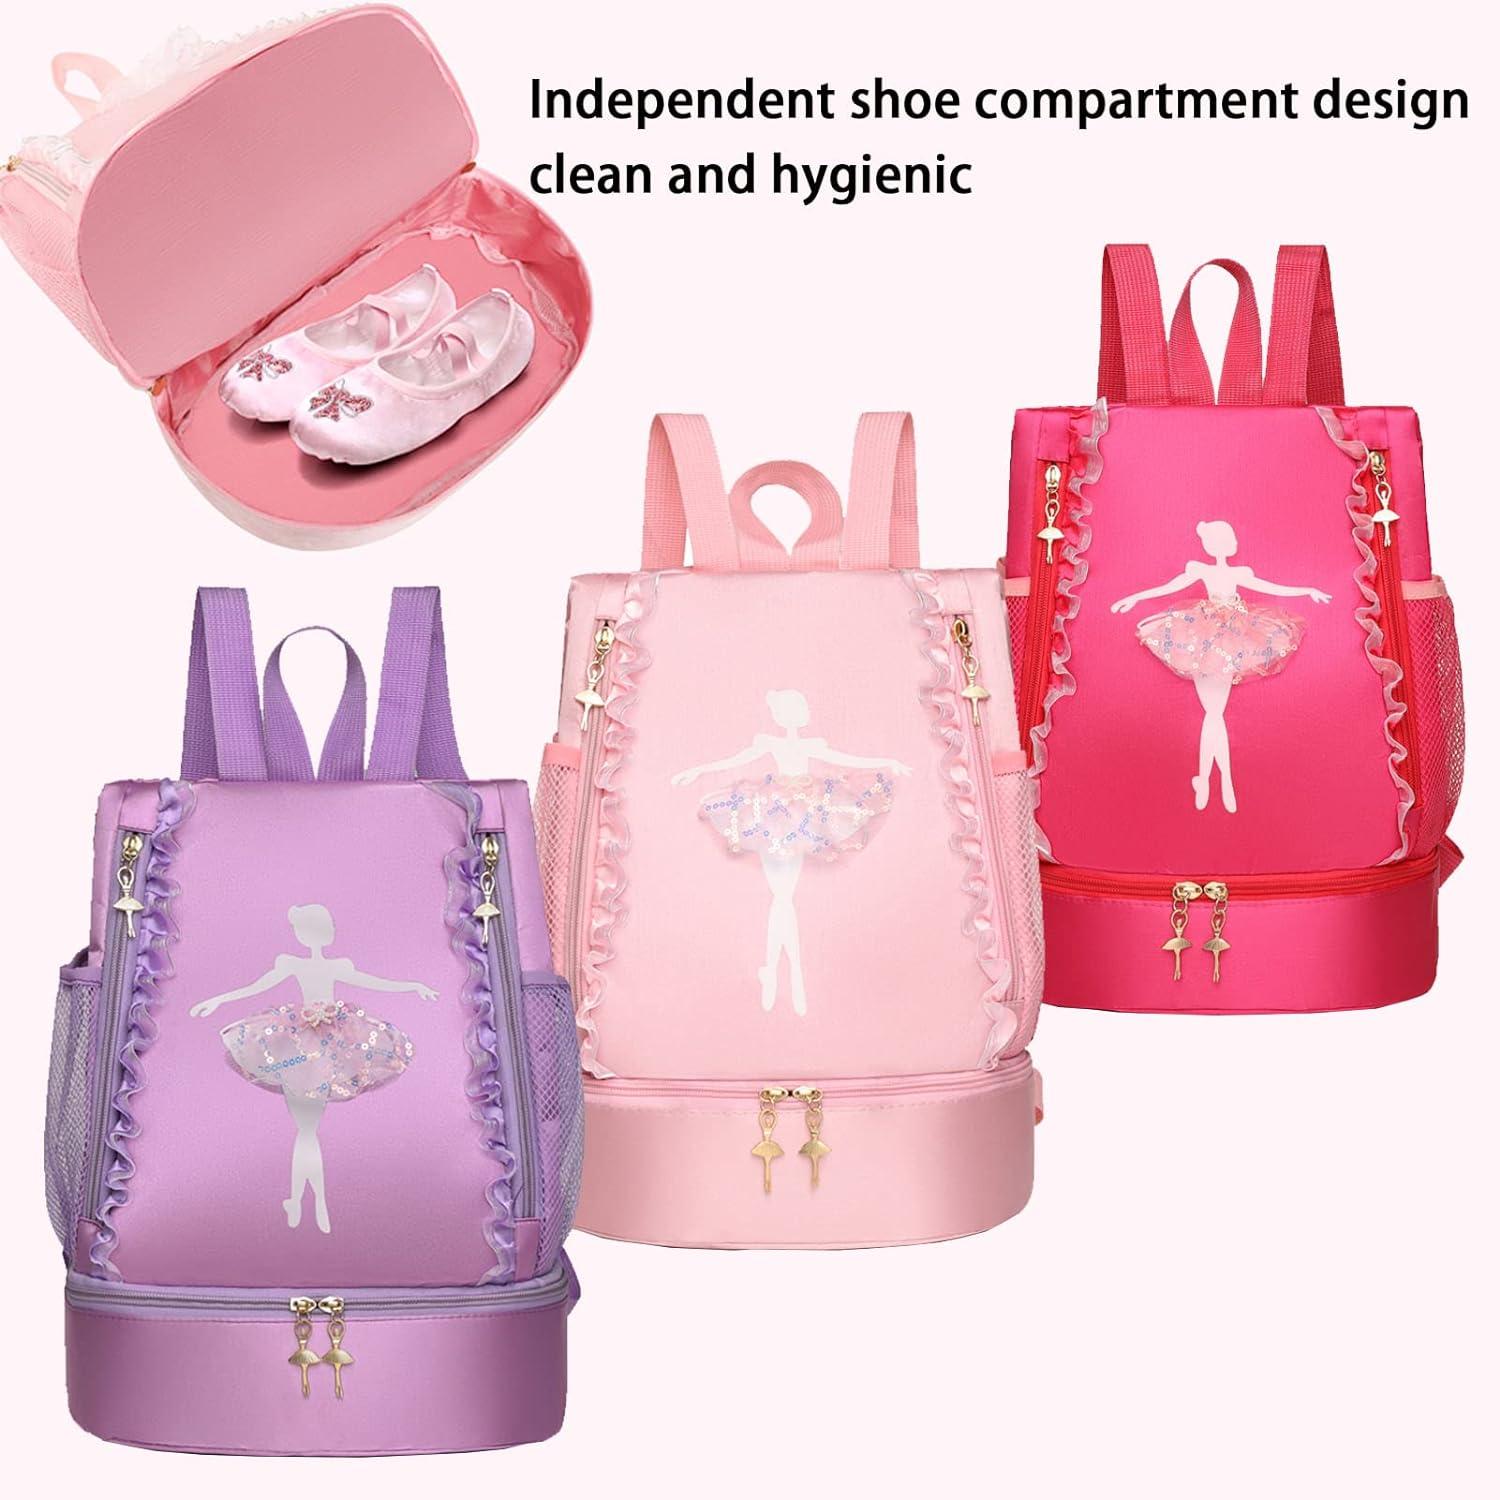 Tap Ballerina Yoga Little Shoe Storage Backpack Girls with Compartment (Pink) for Bag Latin Dance Yitengteng Gymnastics Dance Toddler Dance Bag Separate Bag Ballet Dance Jazz